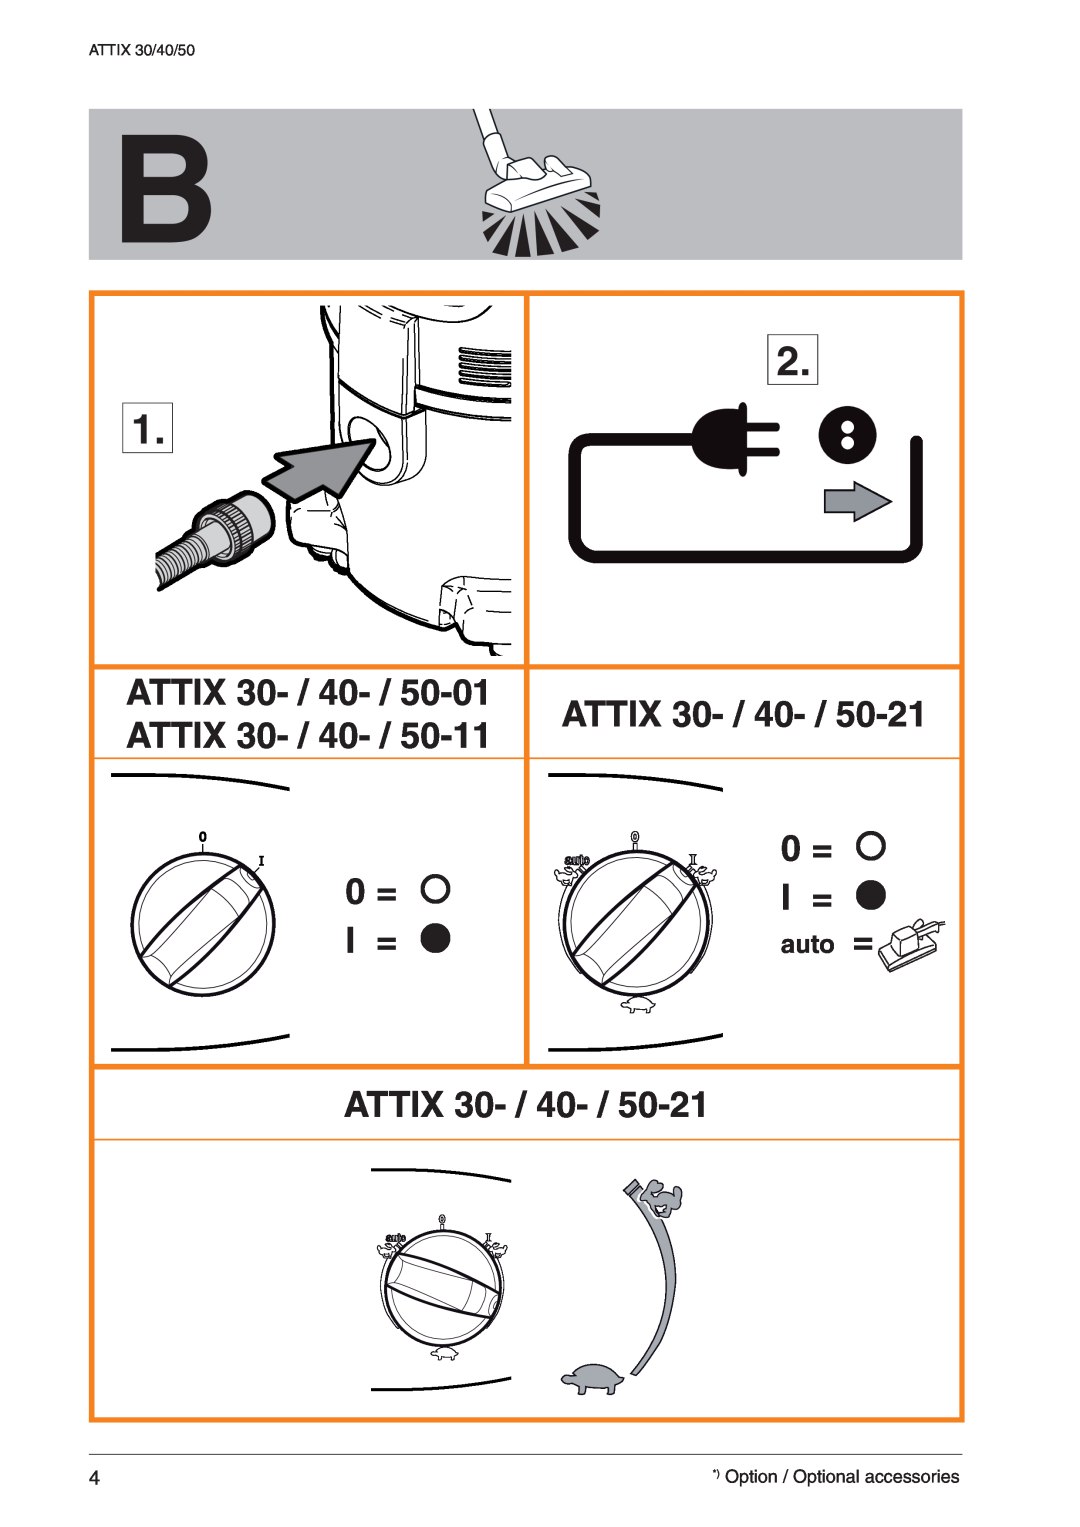 Nilfisk-ALTO ATTIX 50-21 PC EC ATTIX 30- / 40, 0 = , Attix, auto, Option / Optional accessories, ATTIX 30/40/50 